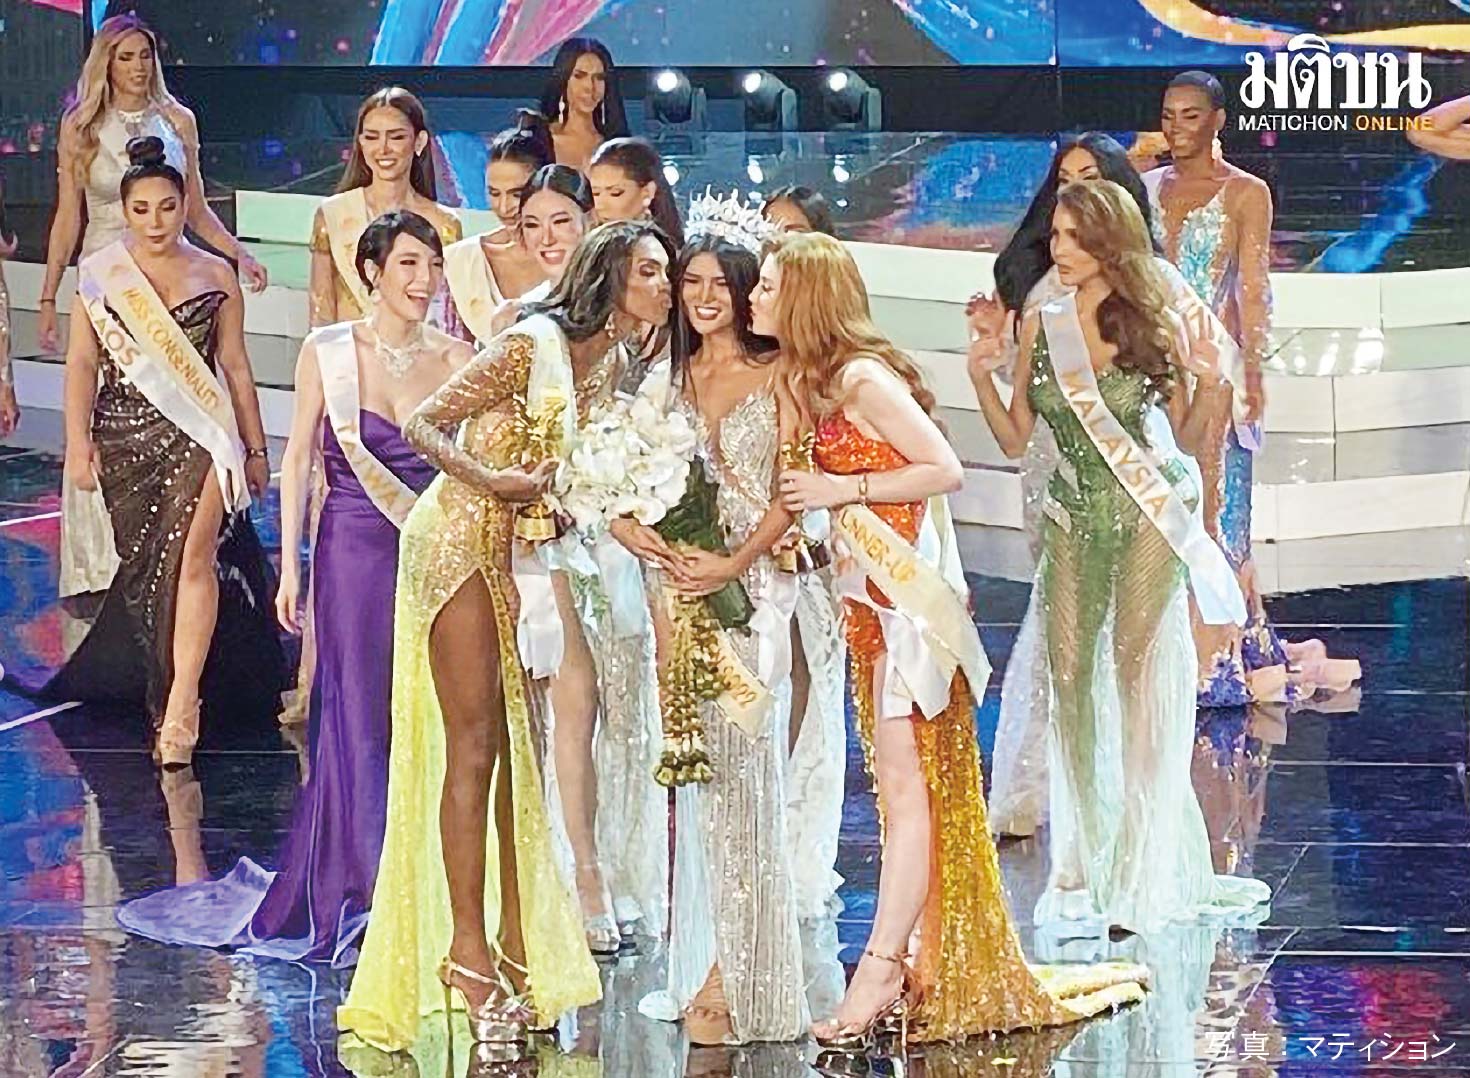 Miss International Queen 2022 フィリピン代表が優勝　ー　6月25日、トランスジェンダーの美人コンテスト「Miss International Queen 2022」の決勝ラウンドがパタヤ市のティファニーズショー劇場で開催された。優勝はフィリピン代表のFuschia Anne Ravenaさん。タイ代表はドレス部門で優秀賞を受賞した。